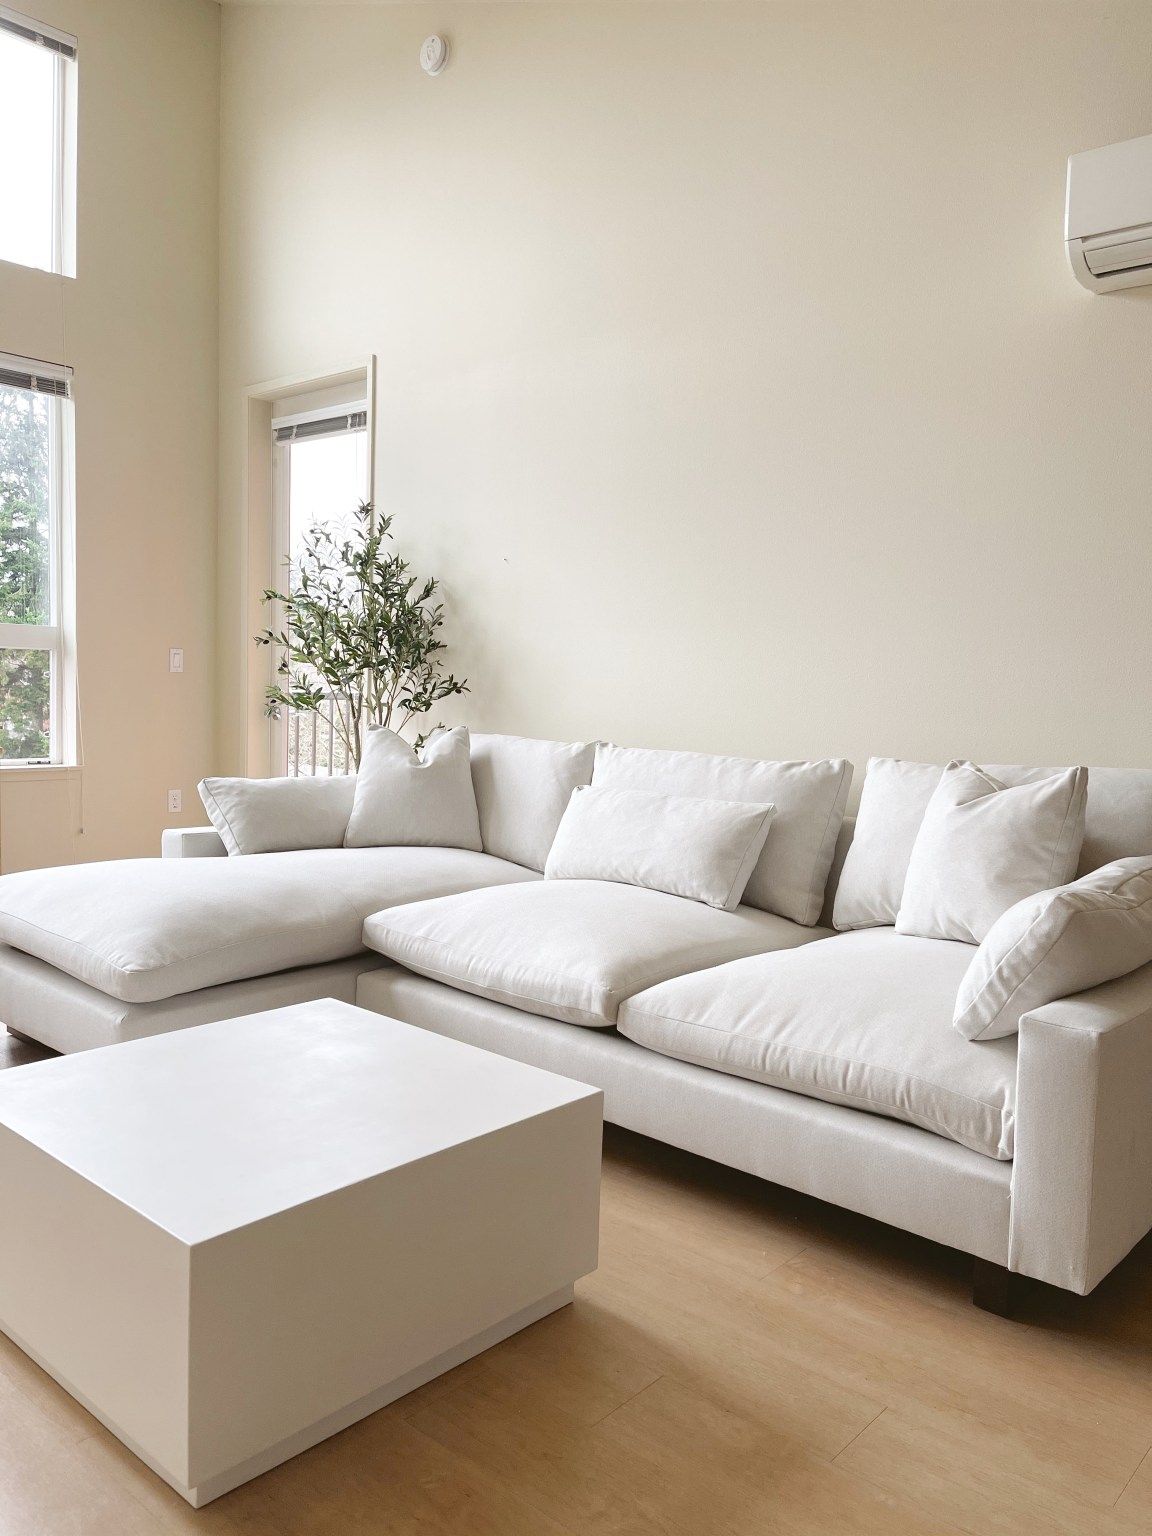 The Harmonic White Sofa for A Neat Minimalist Living Room